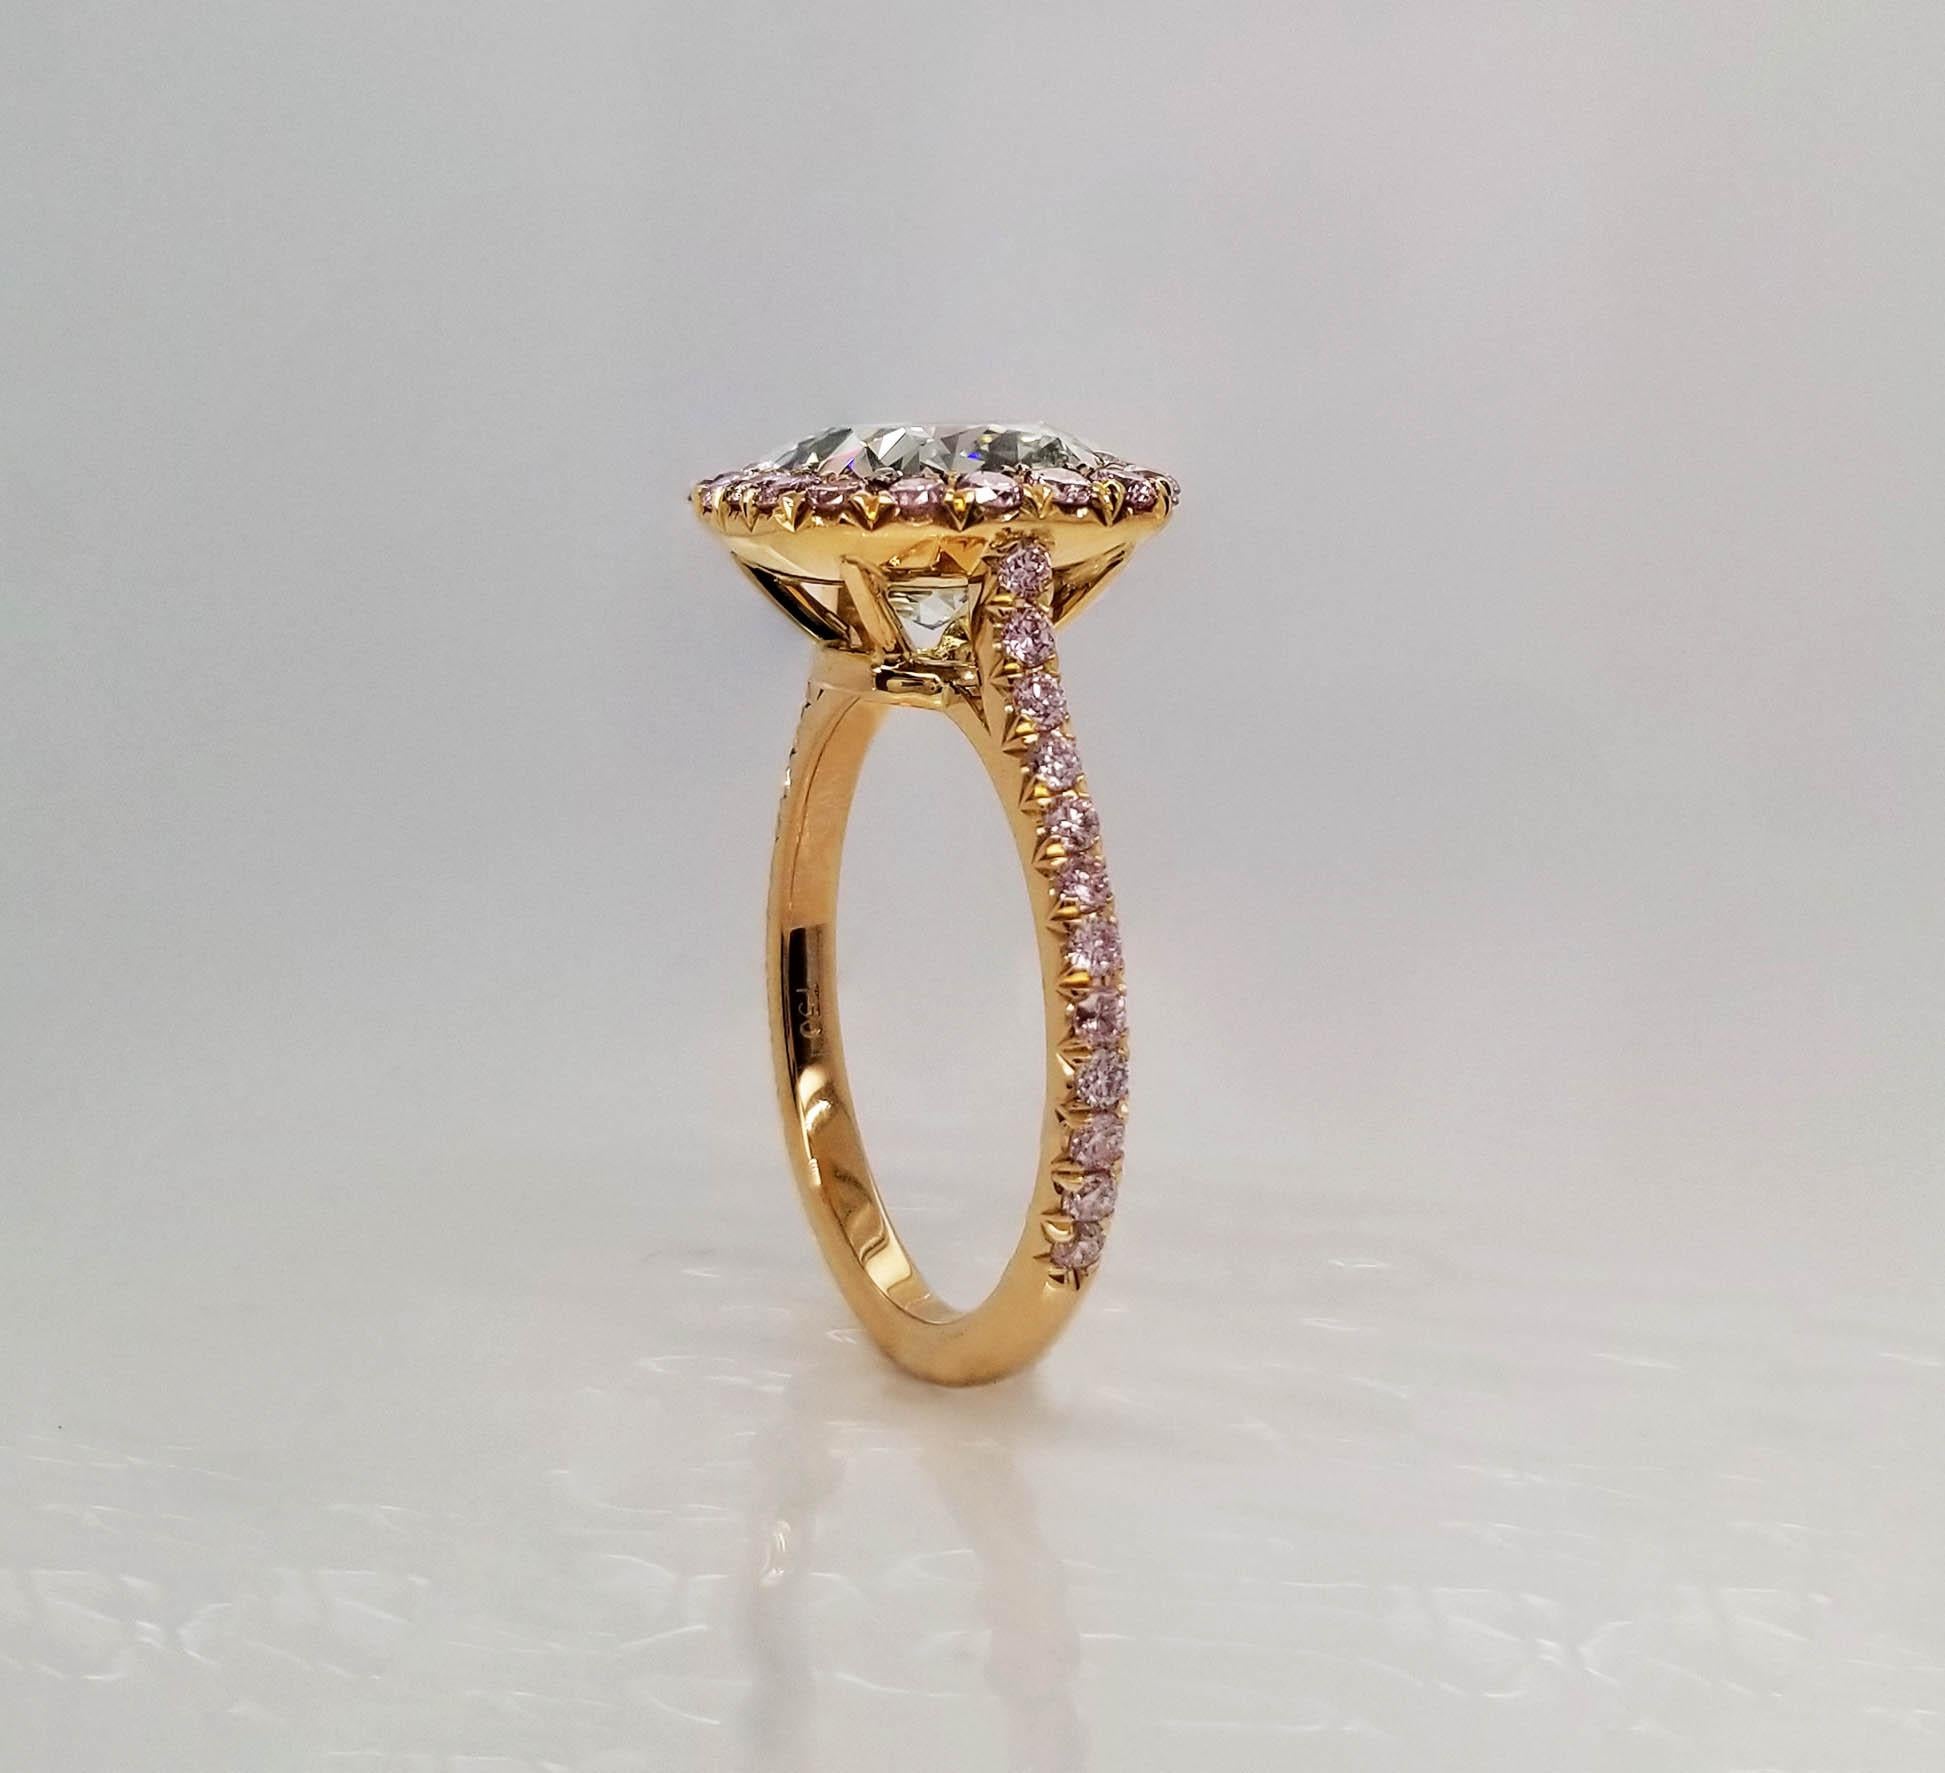 Contemporary Scarselli Fancy Intense Yellowish-Green 3 Carat Diamond Ring in 18k Gold